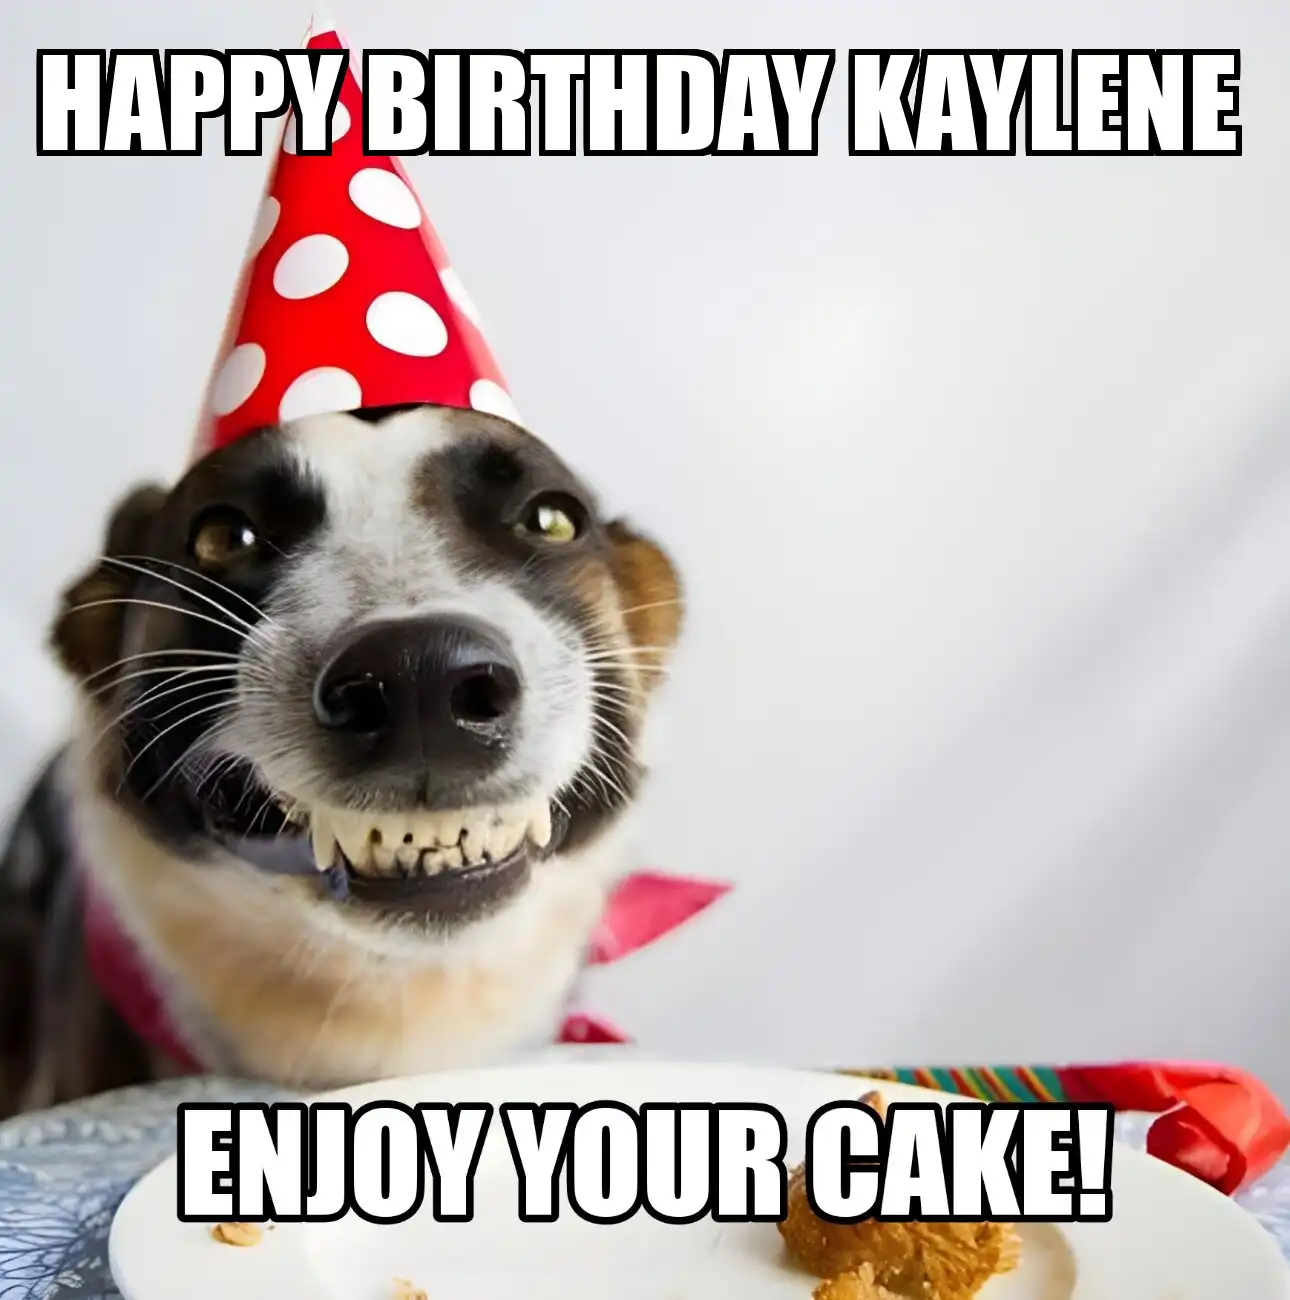 Happy Birthday Kaylene Enjoy Your Cake Dog Meme